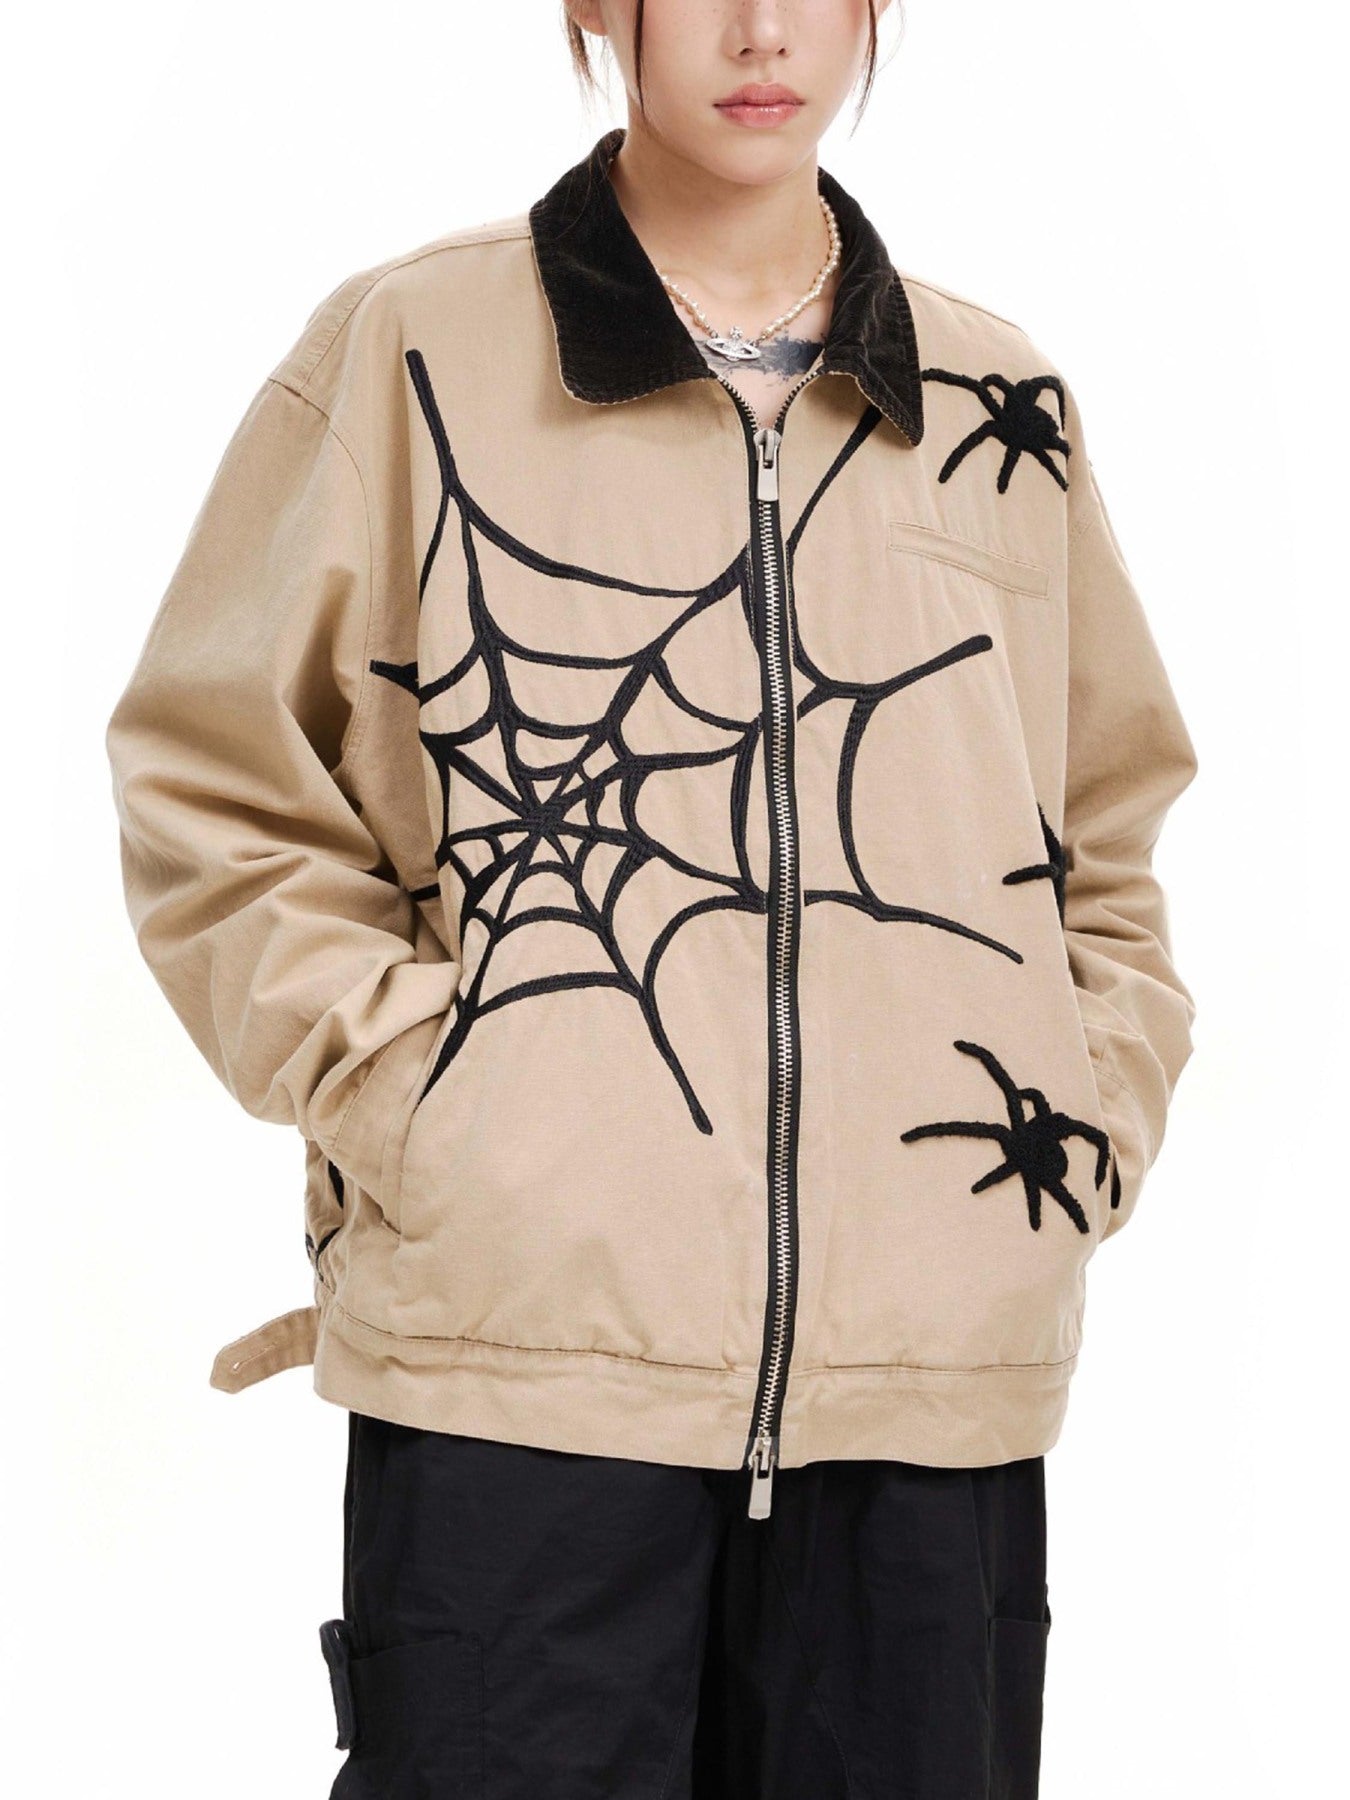 Thesupermade Large Spider Web Embroidered Denim Jacket - 1827